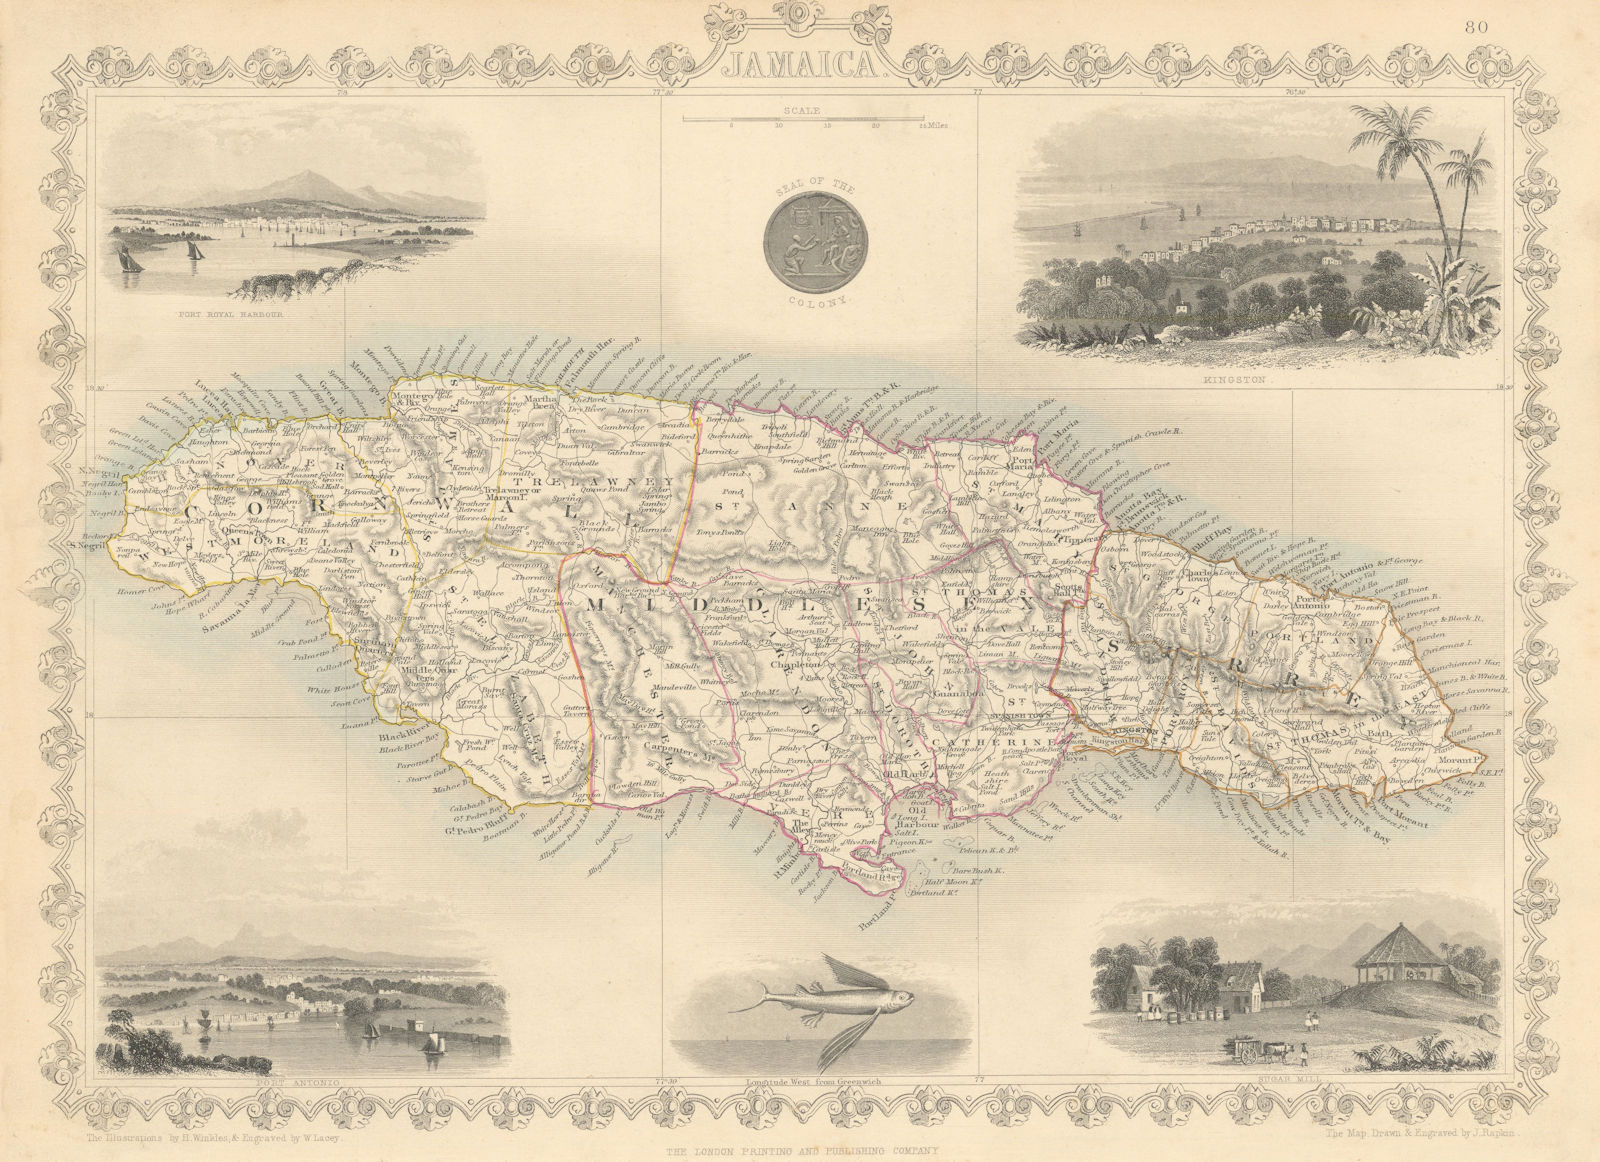 JAMAICA. Counties/parishes. Sugar Mill & Kingston views. RAPKIN/TALLIS 1851 map